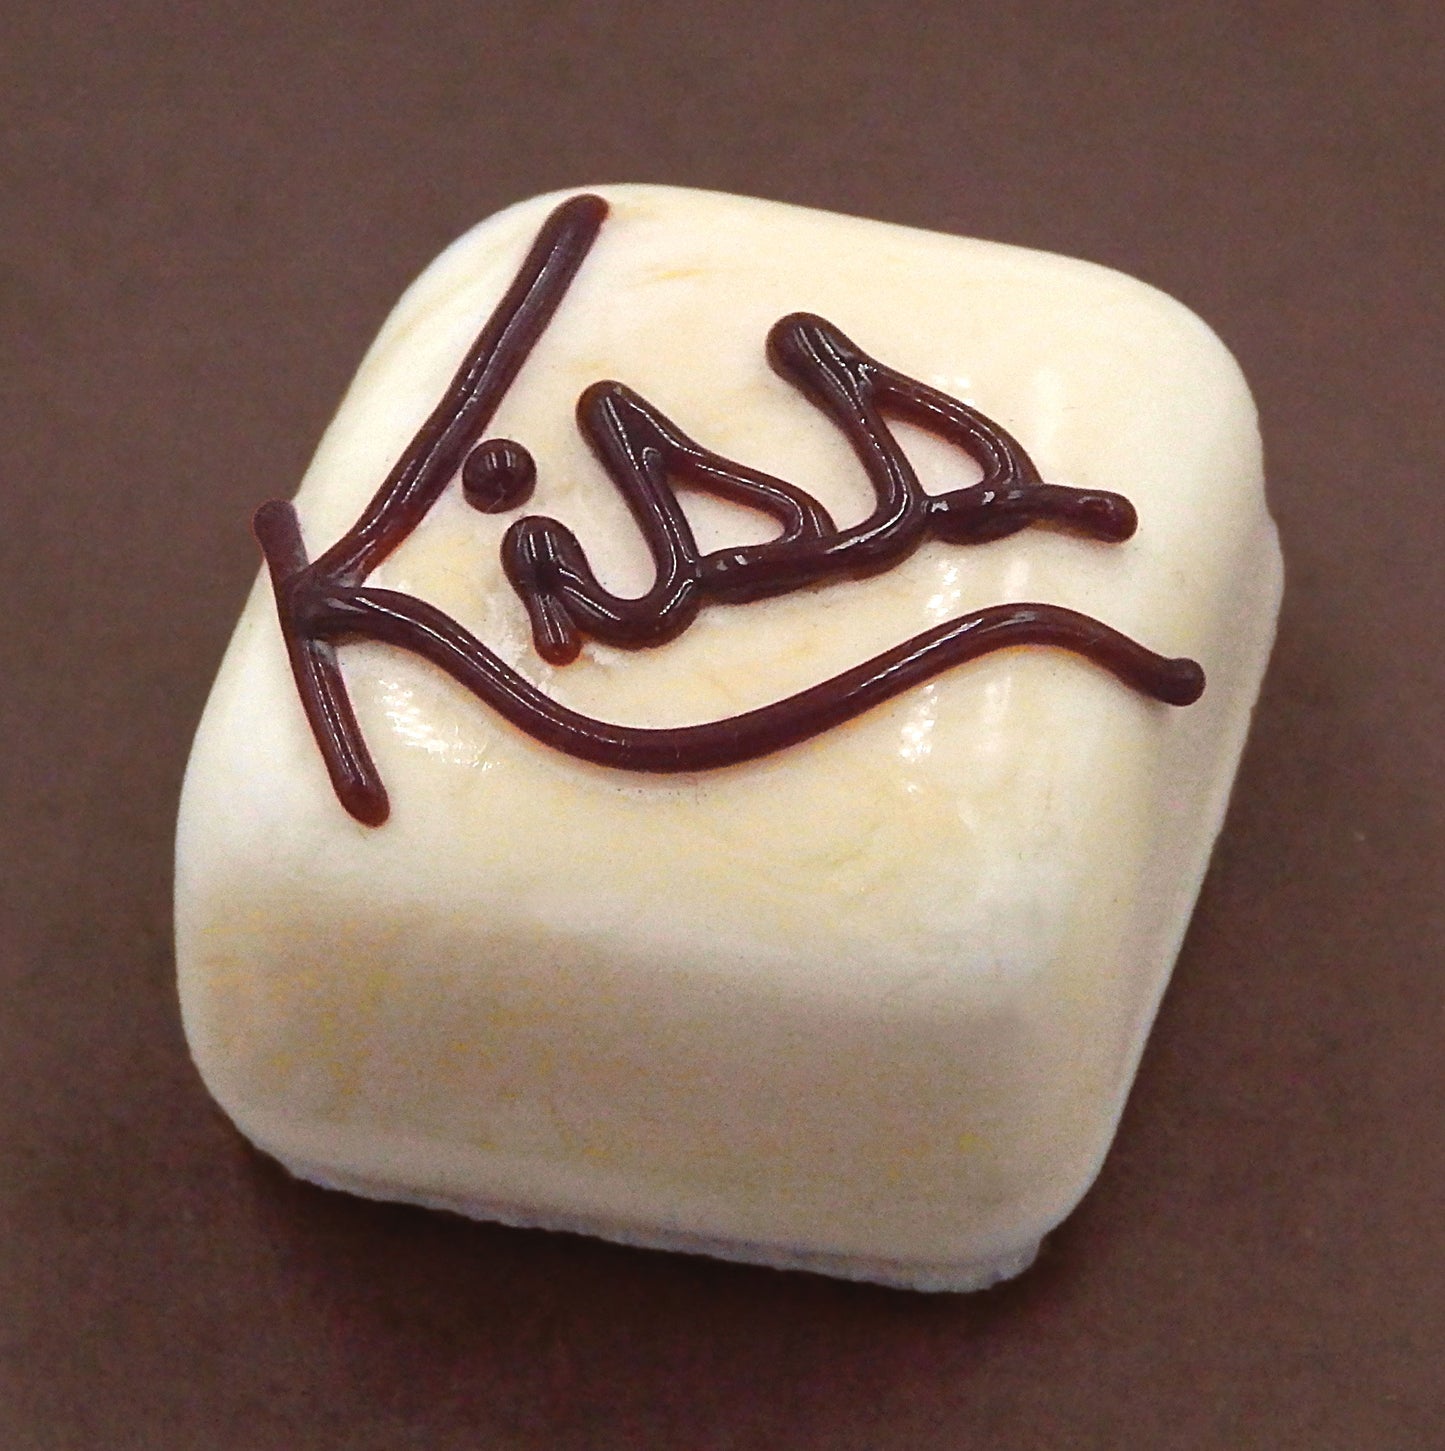 Vanilla & Chocolate "Kiss" (17-022VC)